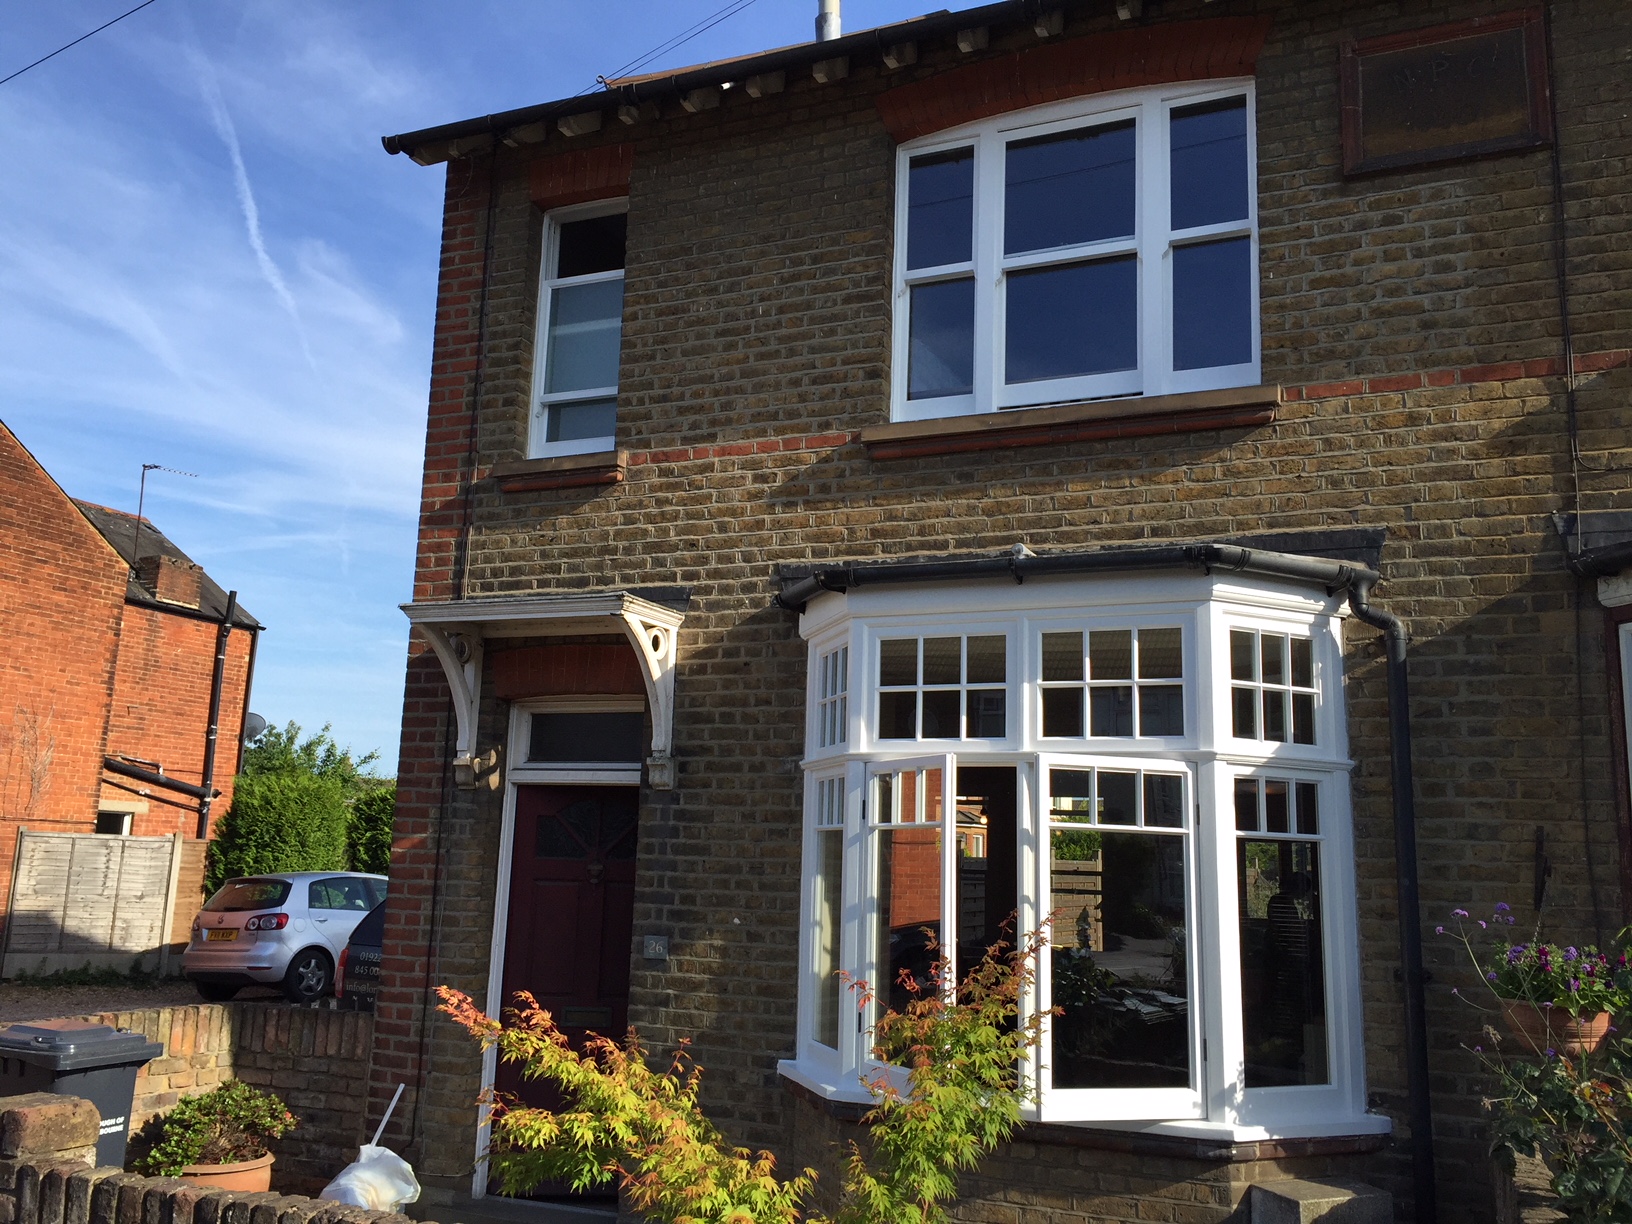 Sash window restoration and double glazing project in Hoddesdon Hertfordshire